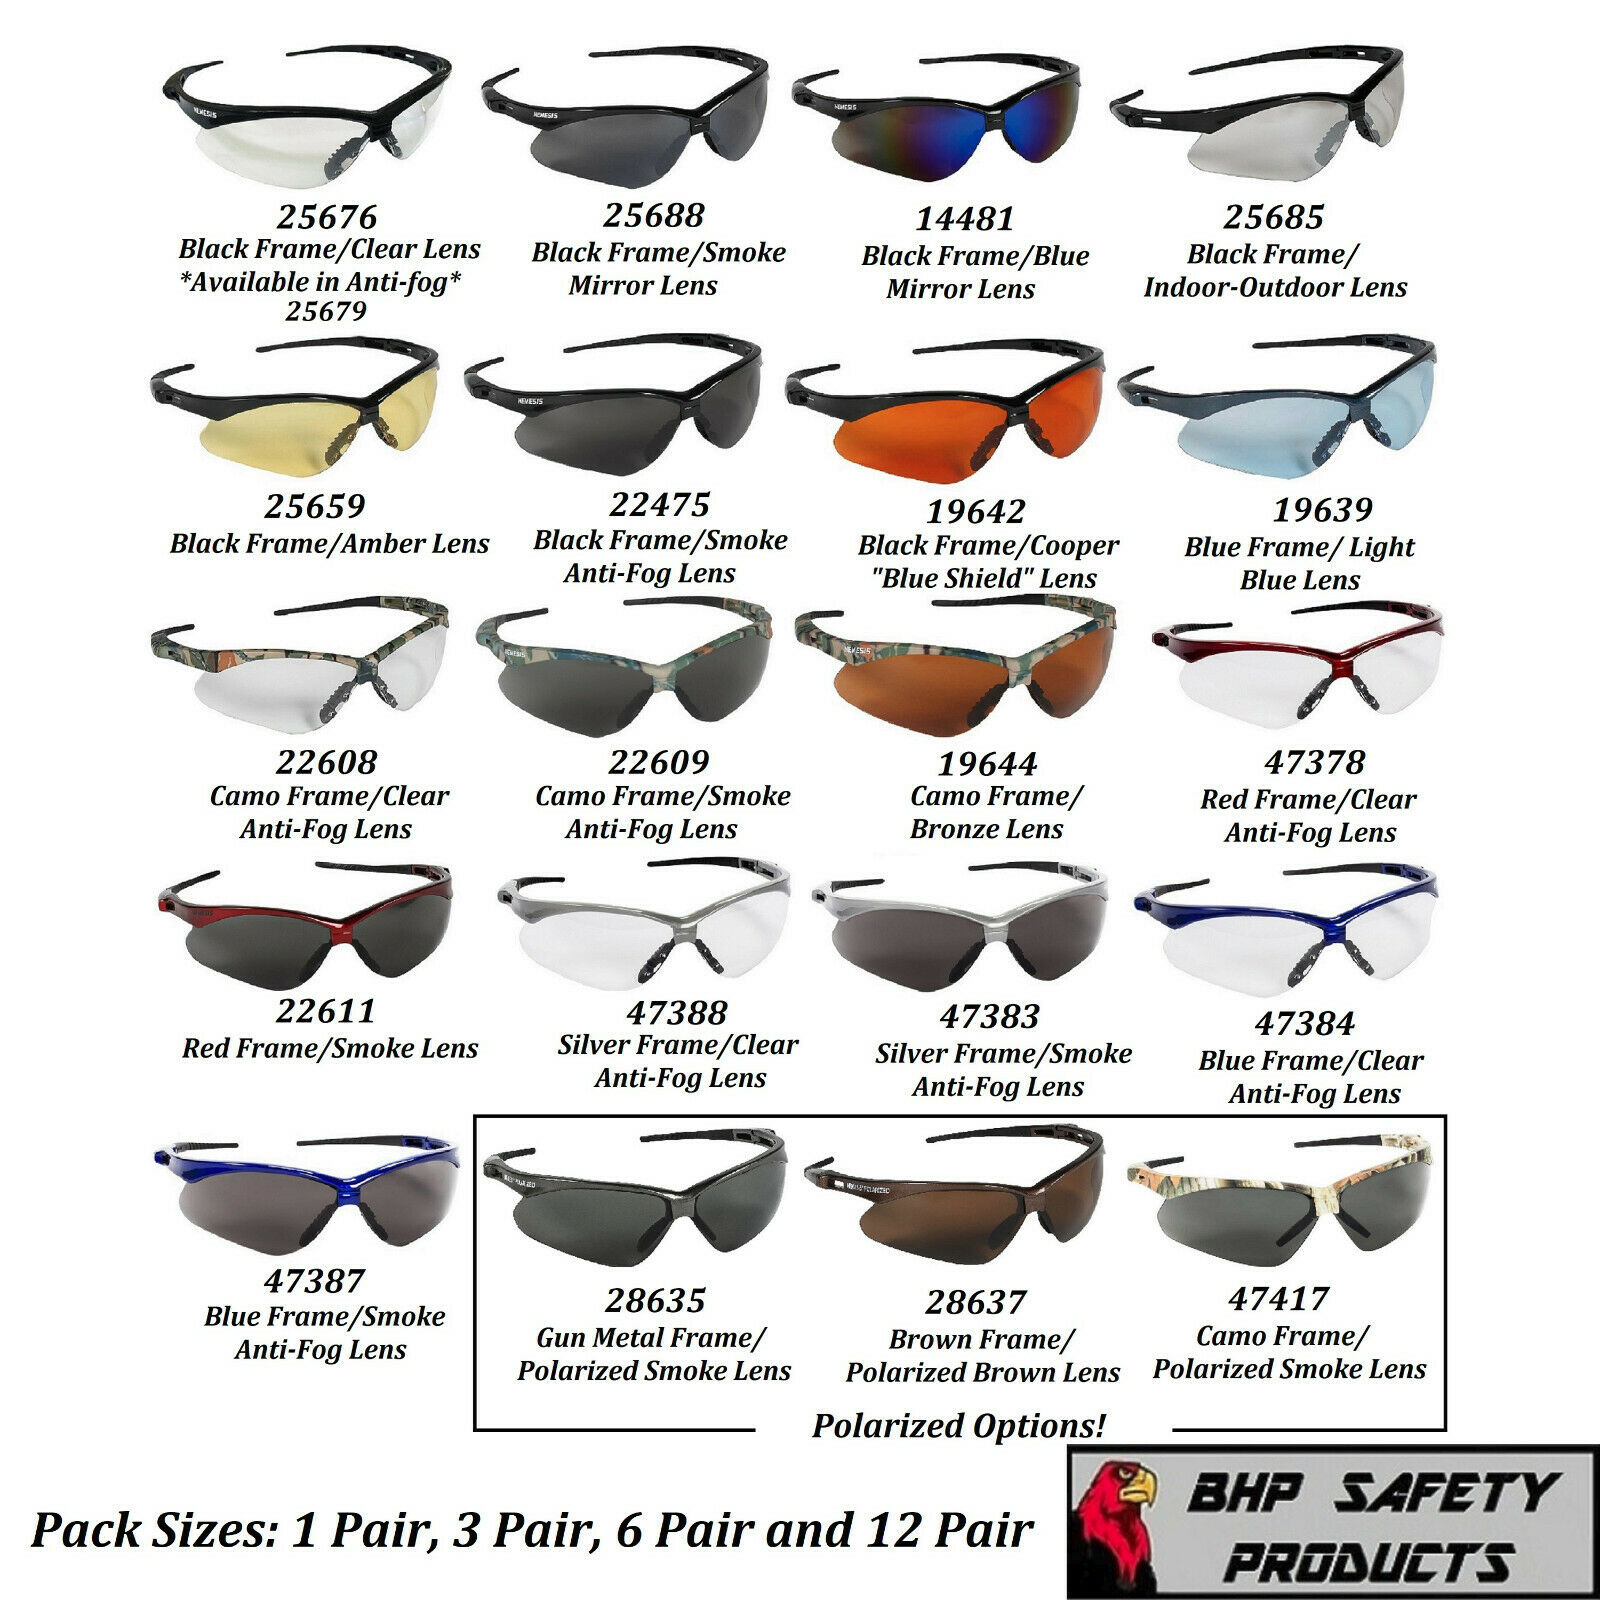 Kleenguard Nemesis Safety Glasses Sunglasses Sport Work Eyewear Ansi Rating Z87